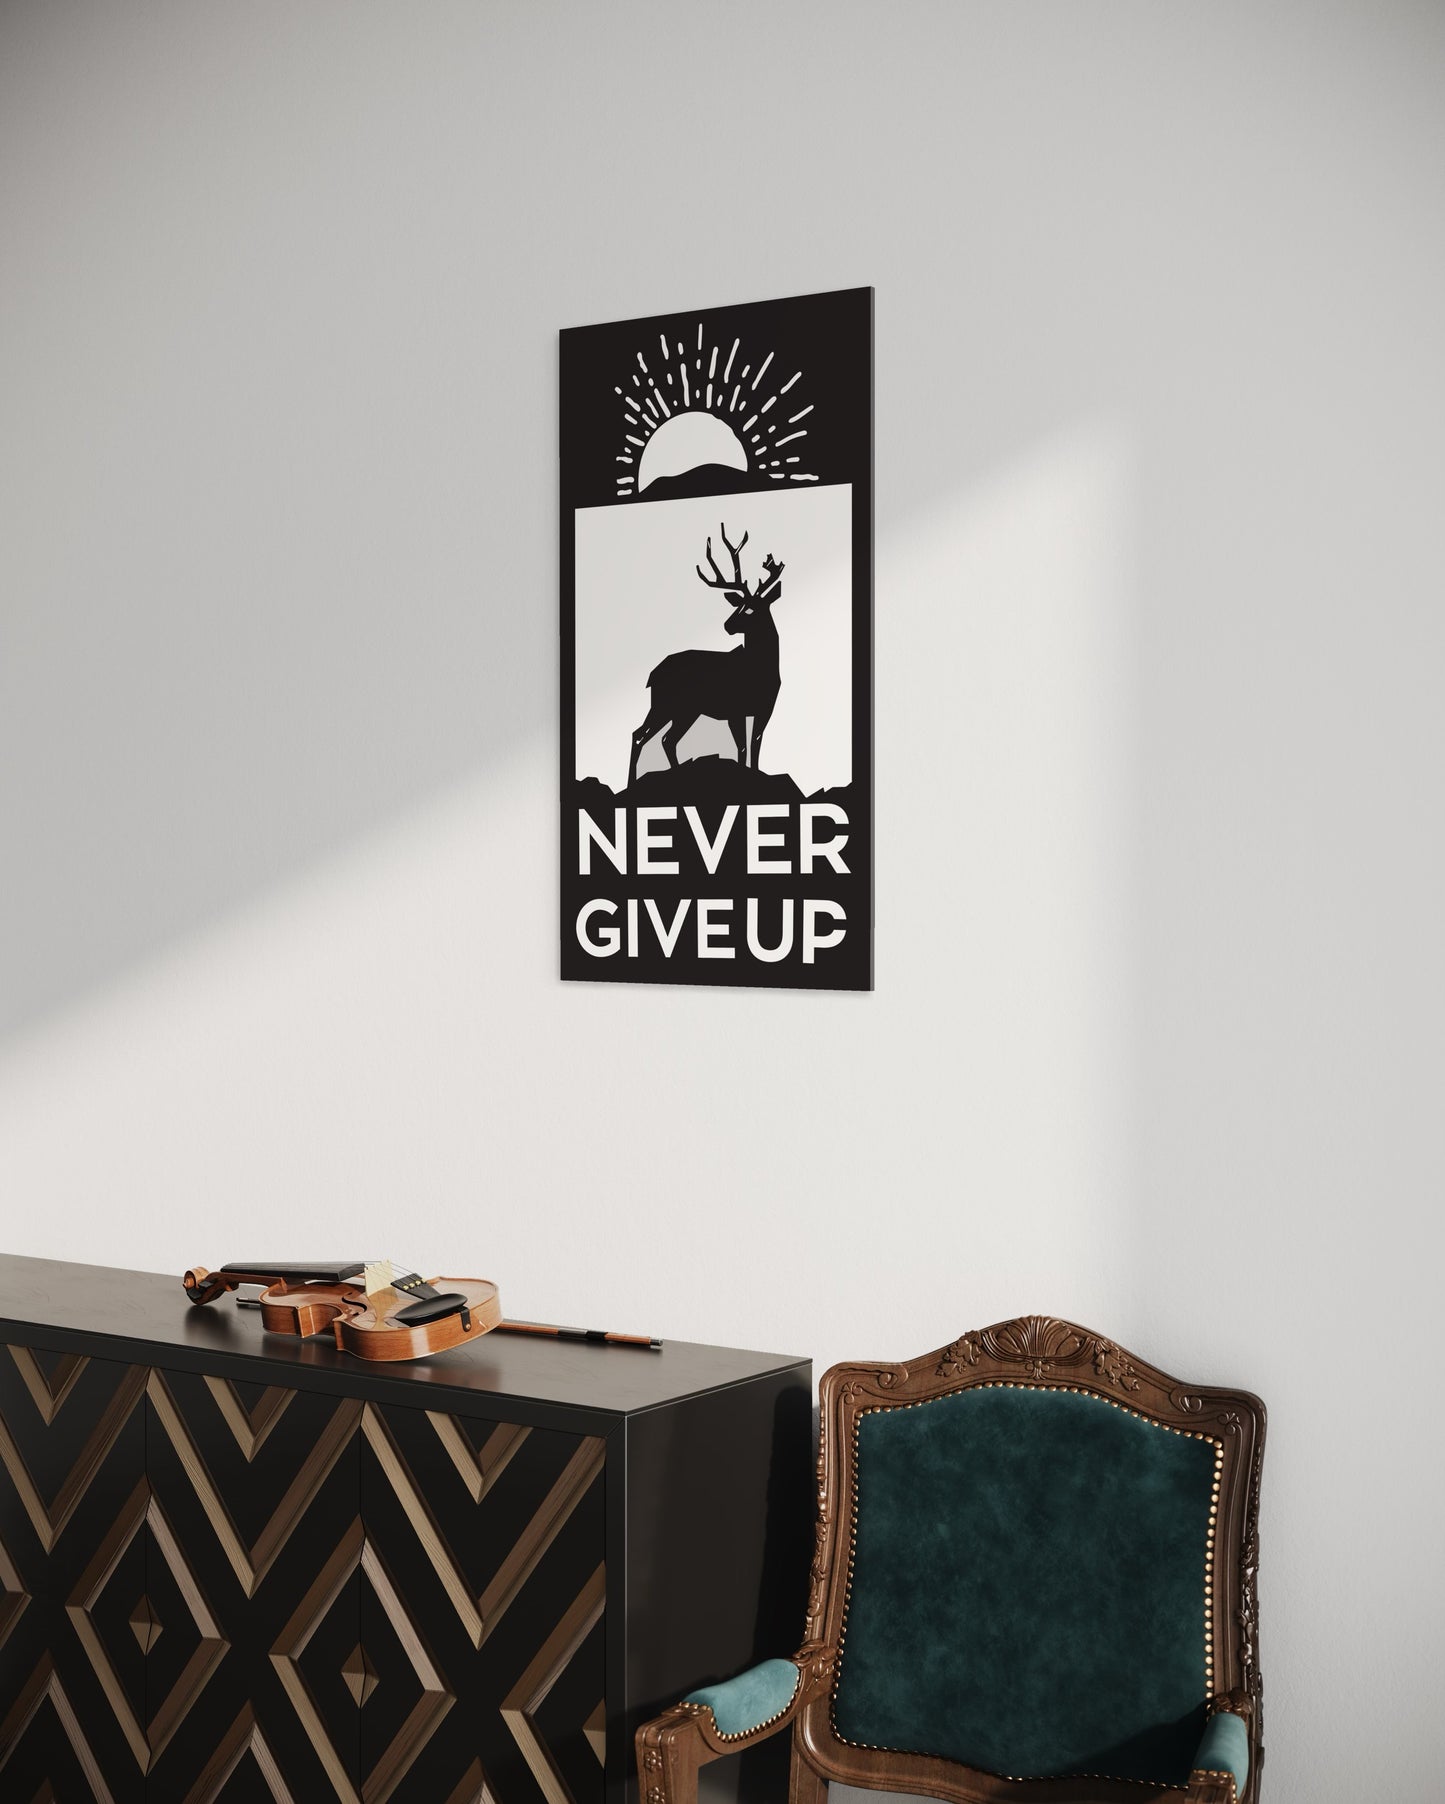 Motivational Wooden Wall Decoration | "Never Give Up" | Matte Black | Excellent Finish | Premium Wood